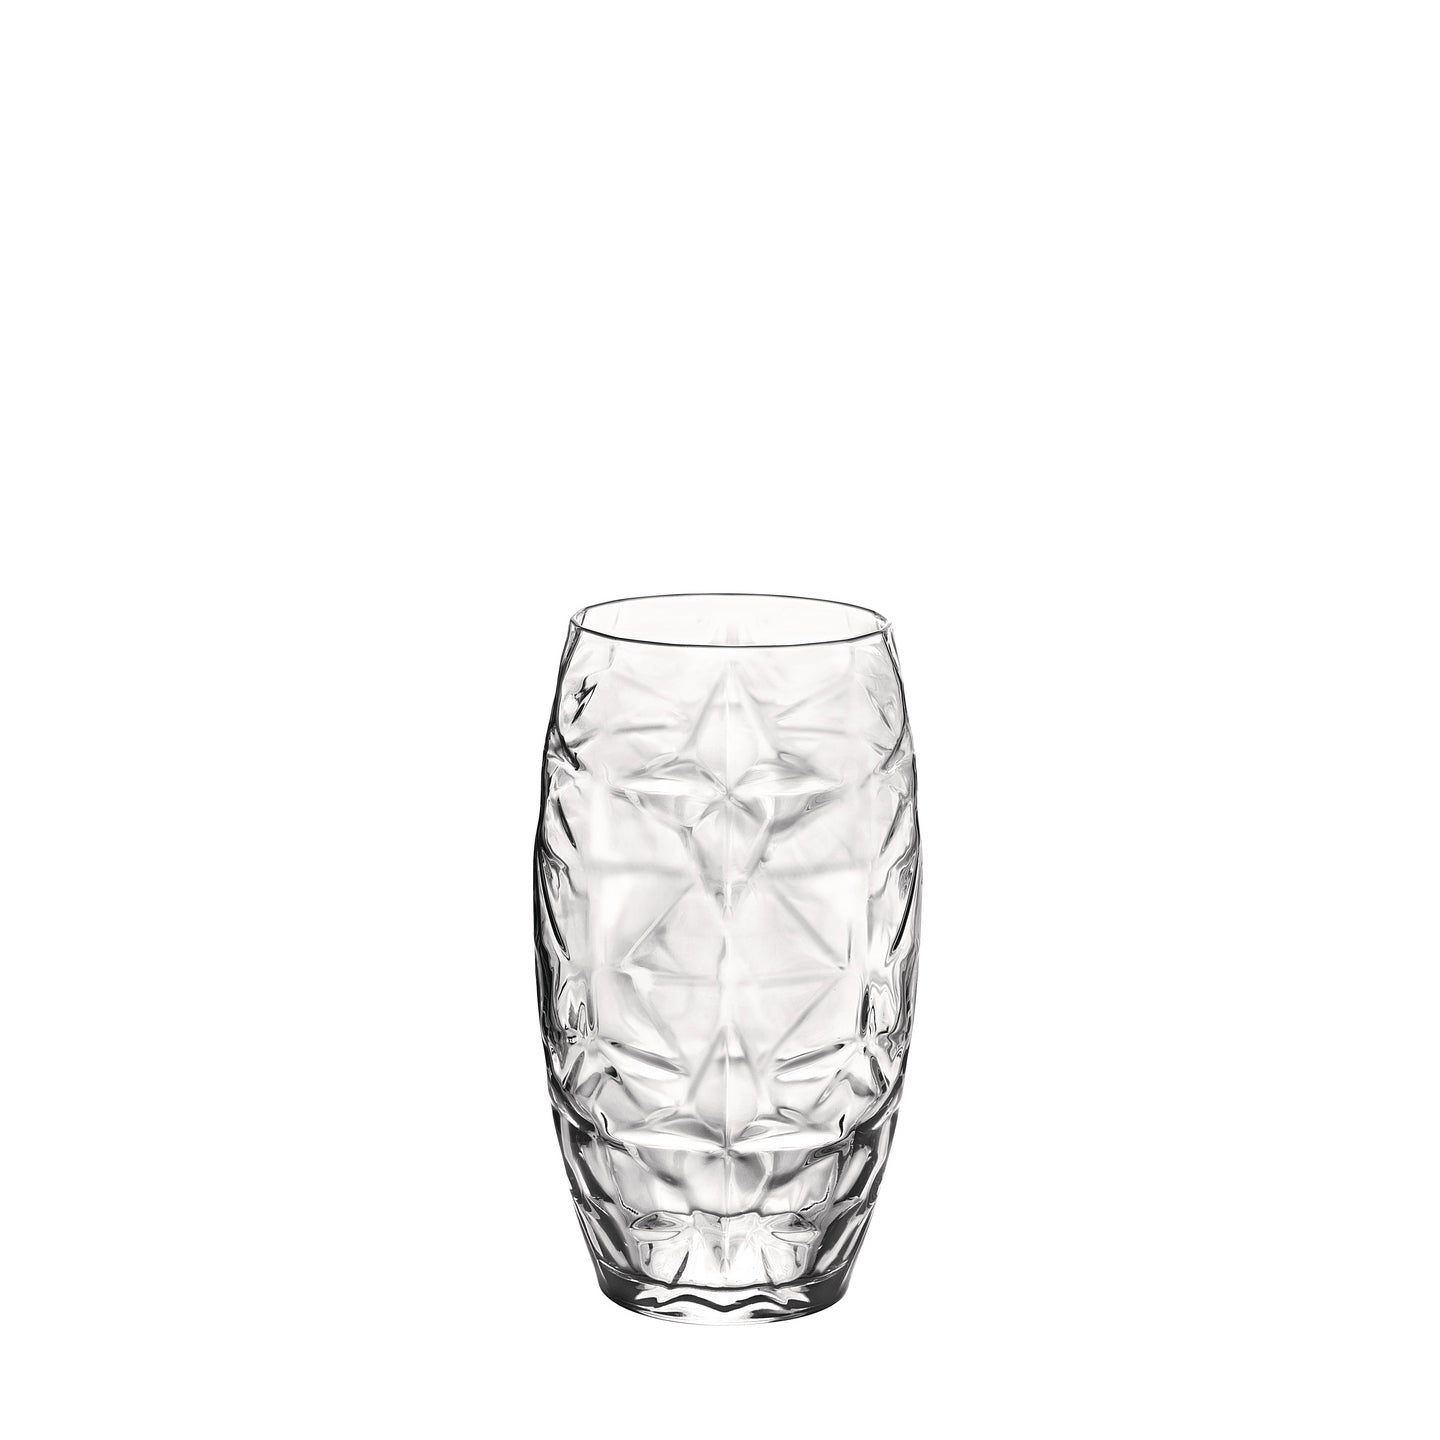 Oriente 16oz. Cooler Drinking Glasses (Set of 6)